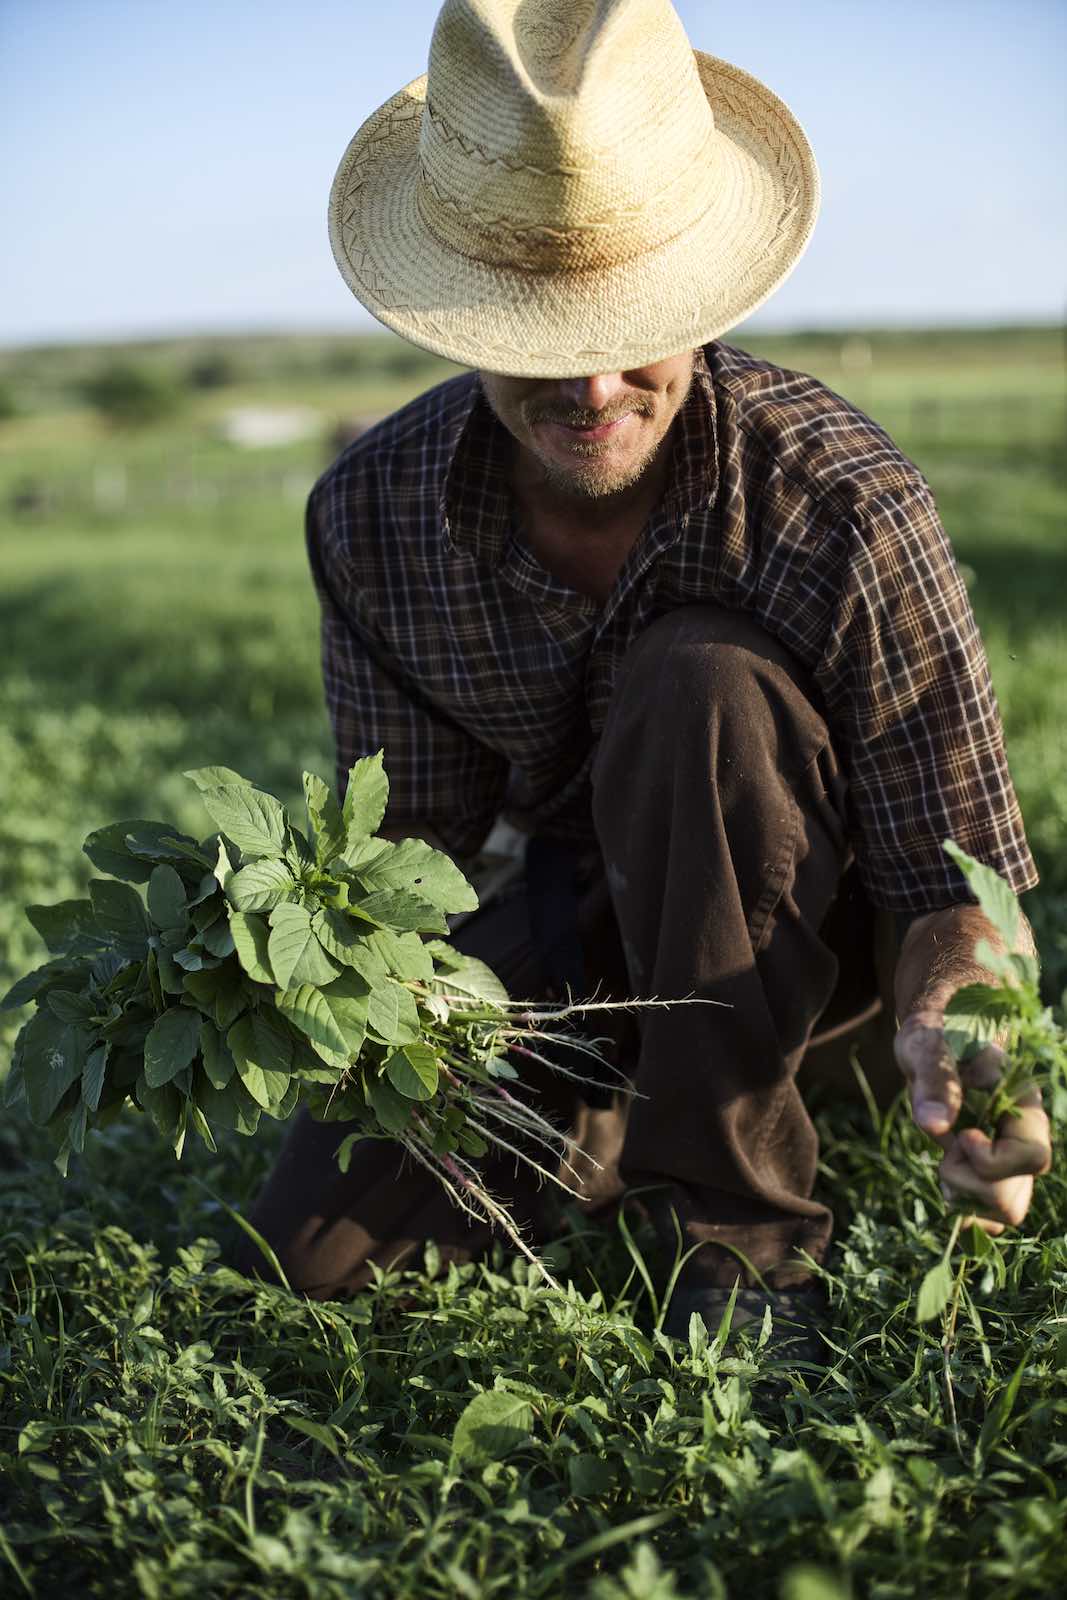 Jody Horton Photography - Farmer in a straw hat harvesting greens.